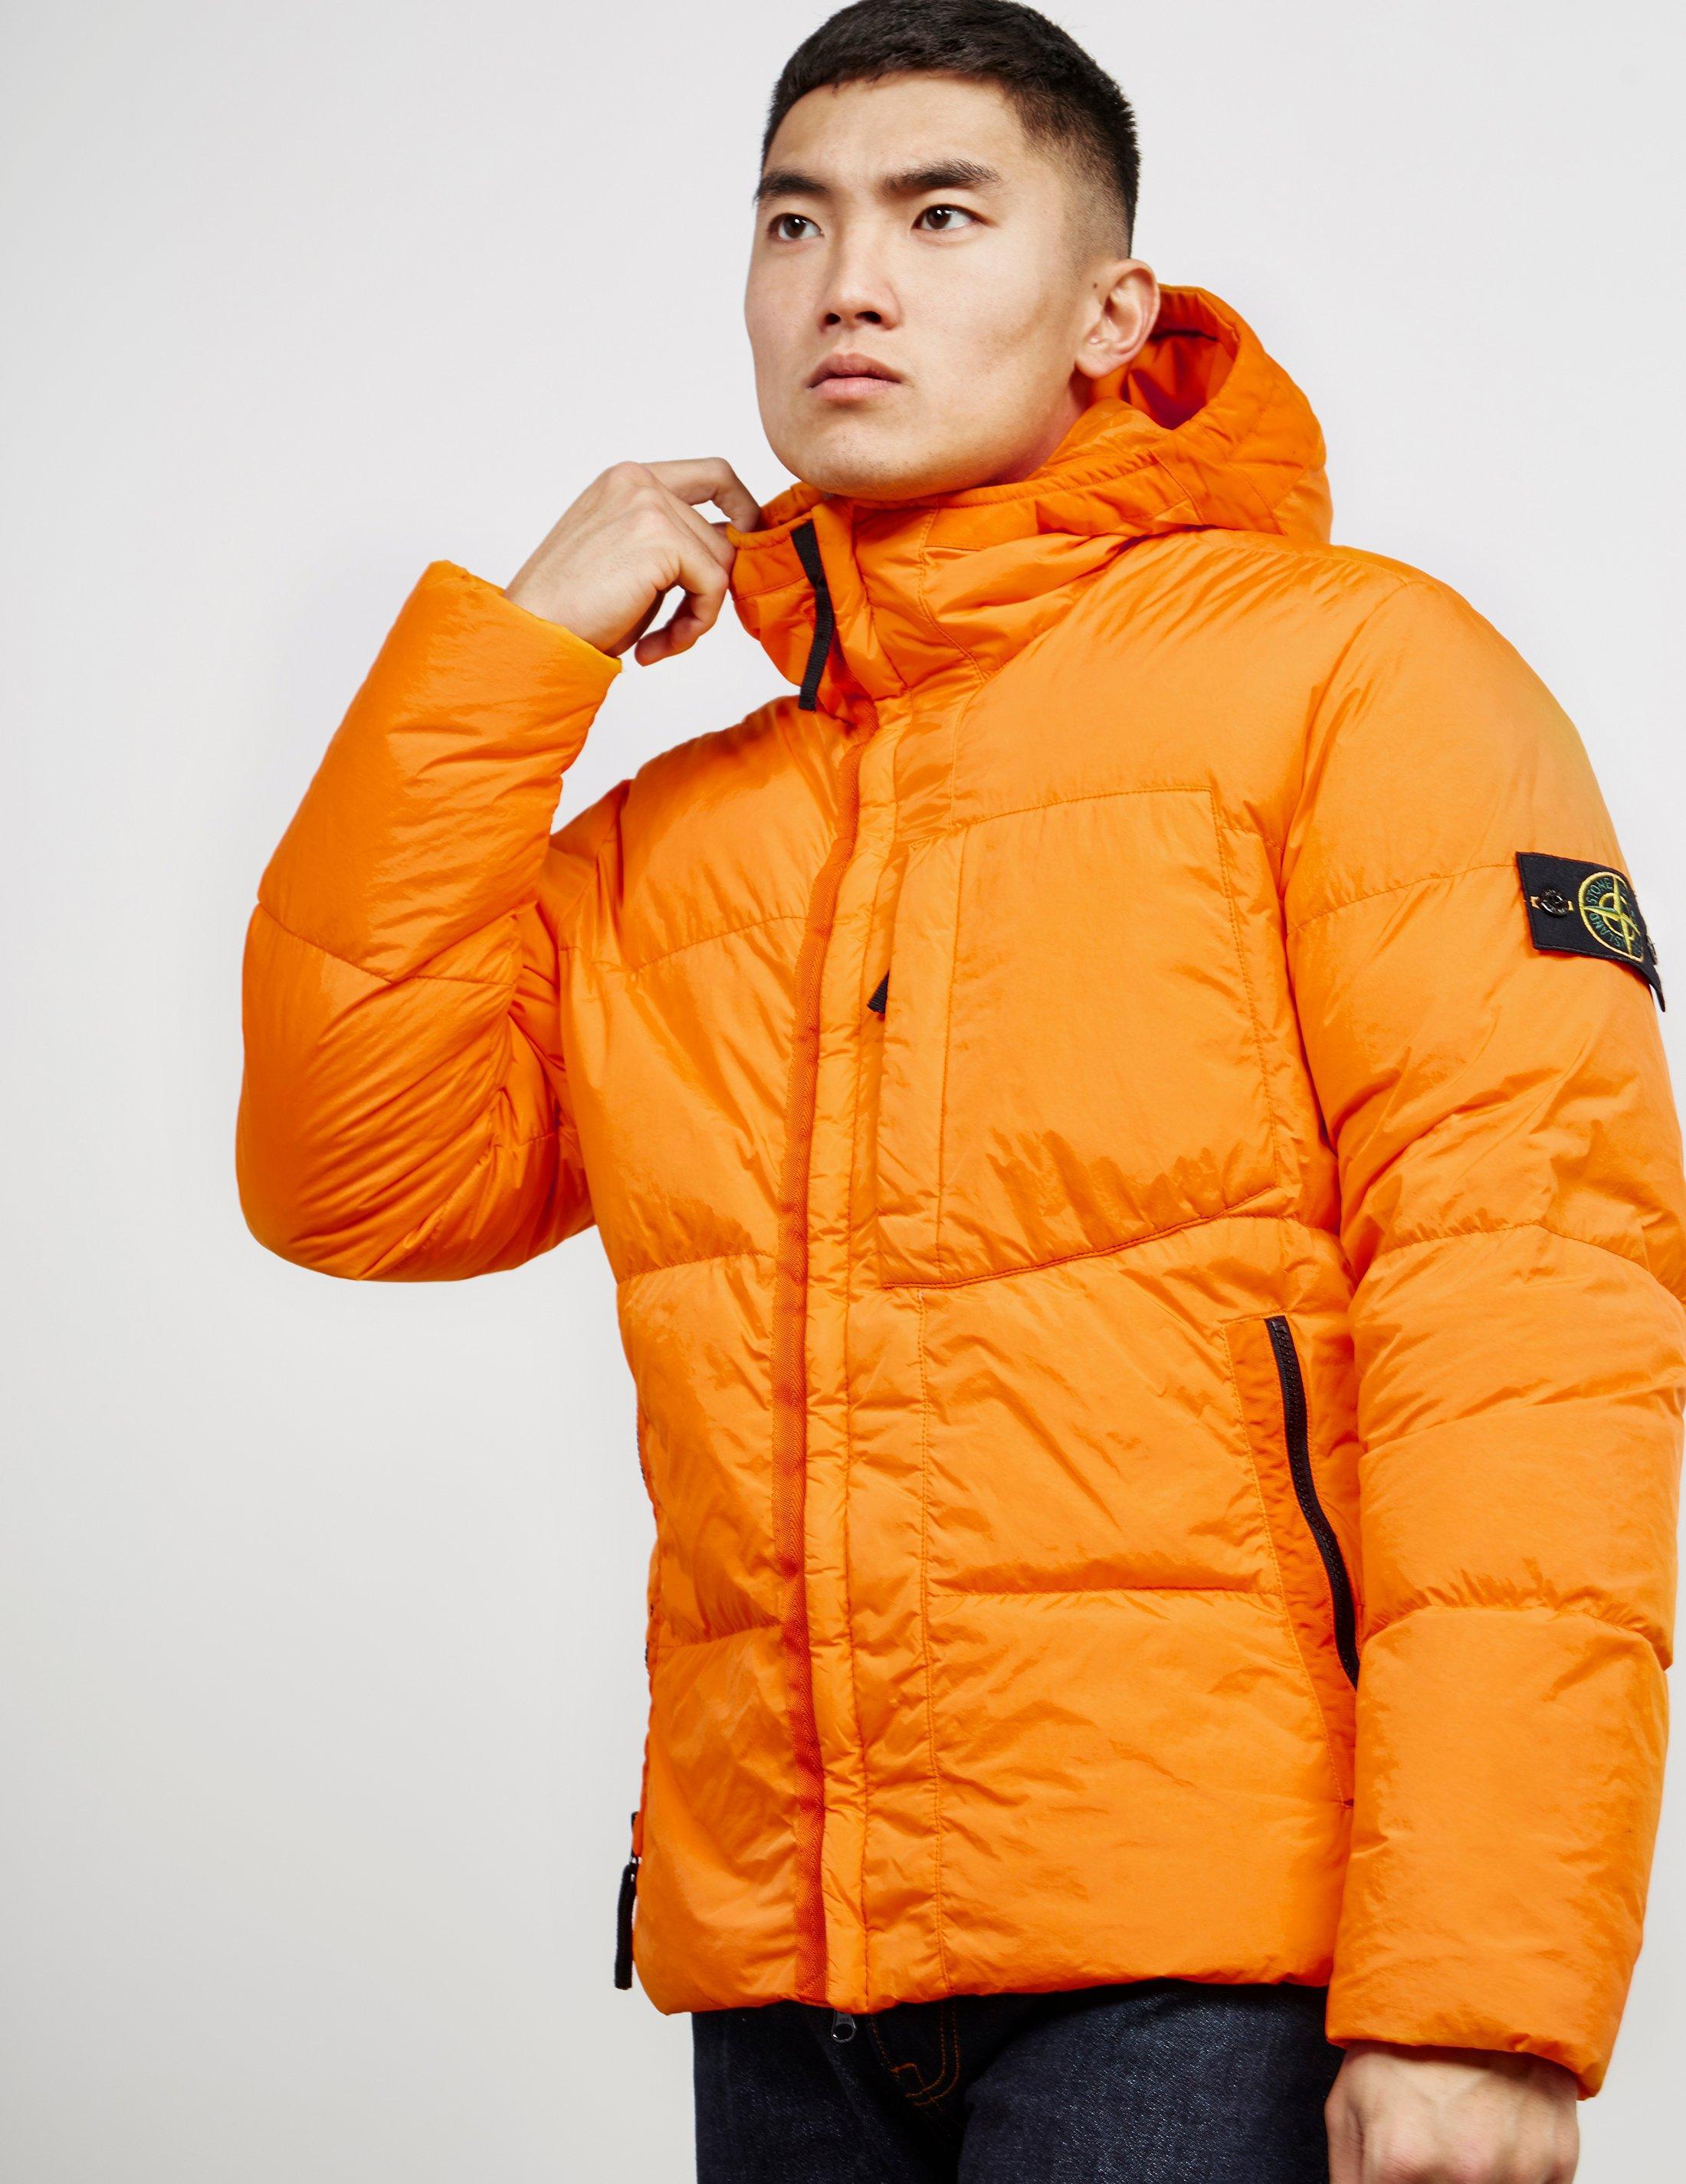 Stone Island Garment Dyed Crinkle Jacket in Orange for Men - Lyst